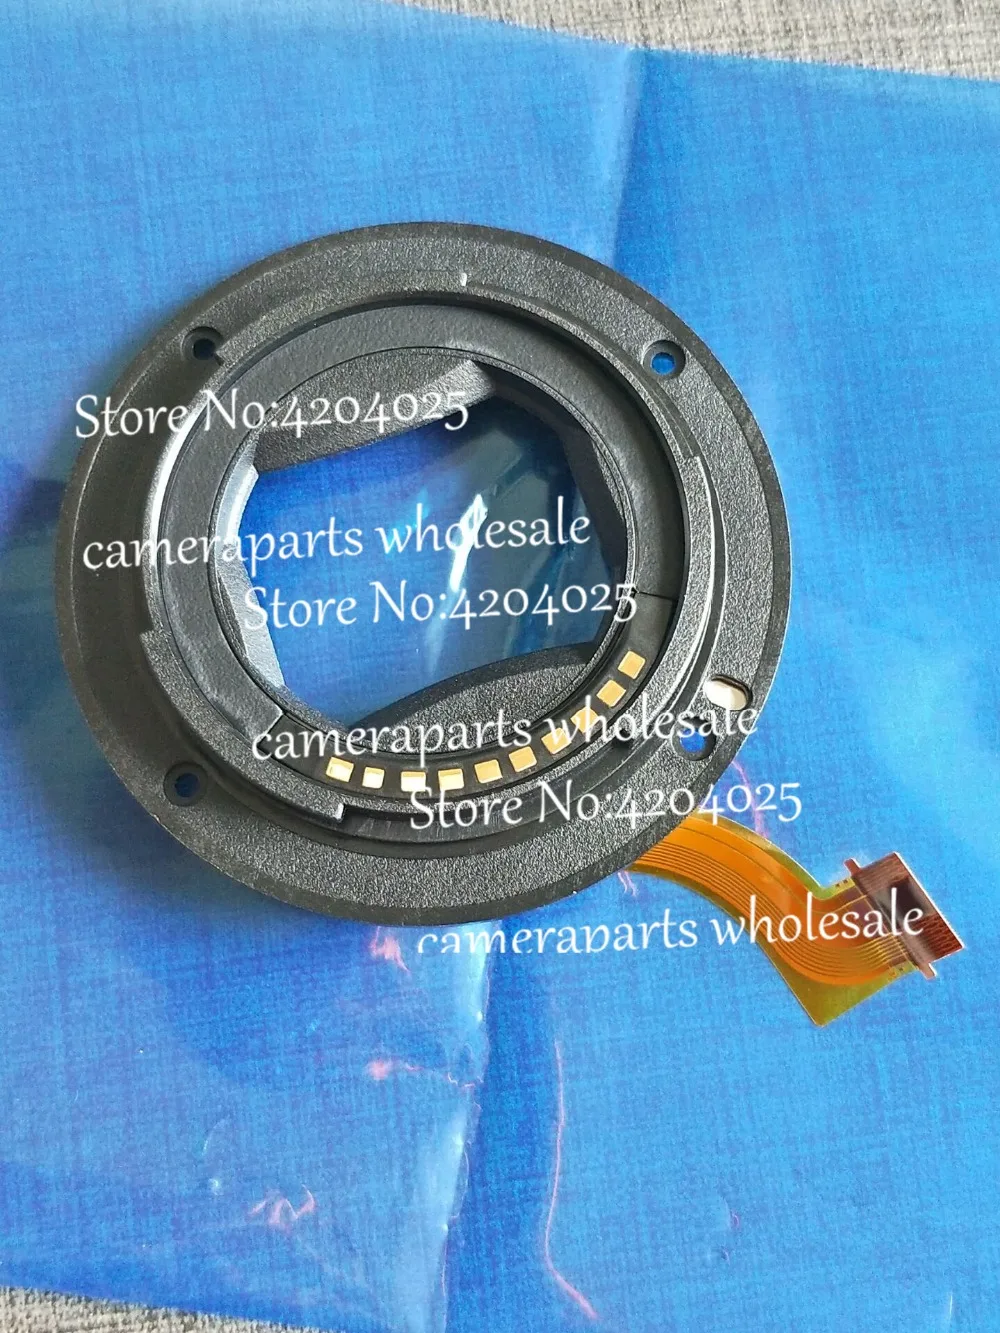 16-50 объектив задний байонет кольцо с контактным гибким кабелем для Fuji Fujifilm XC 16-50 мм f/3,5-5,6 OIS запасная часть блока